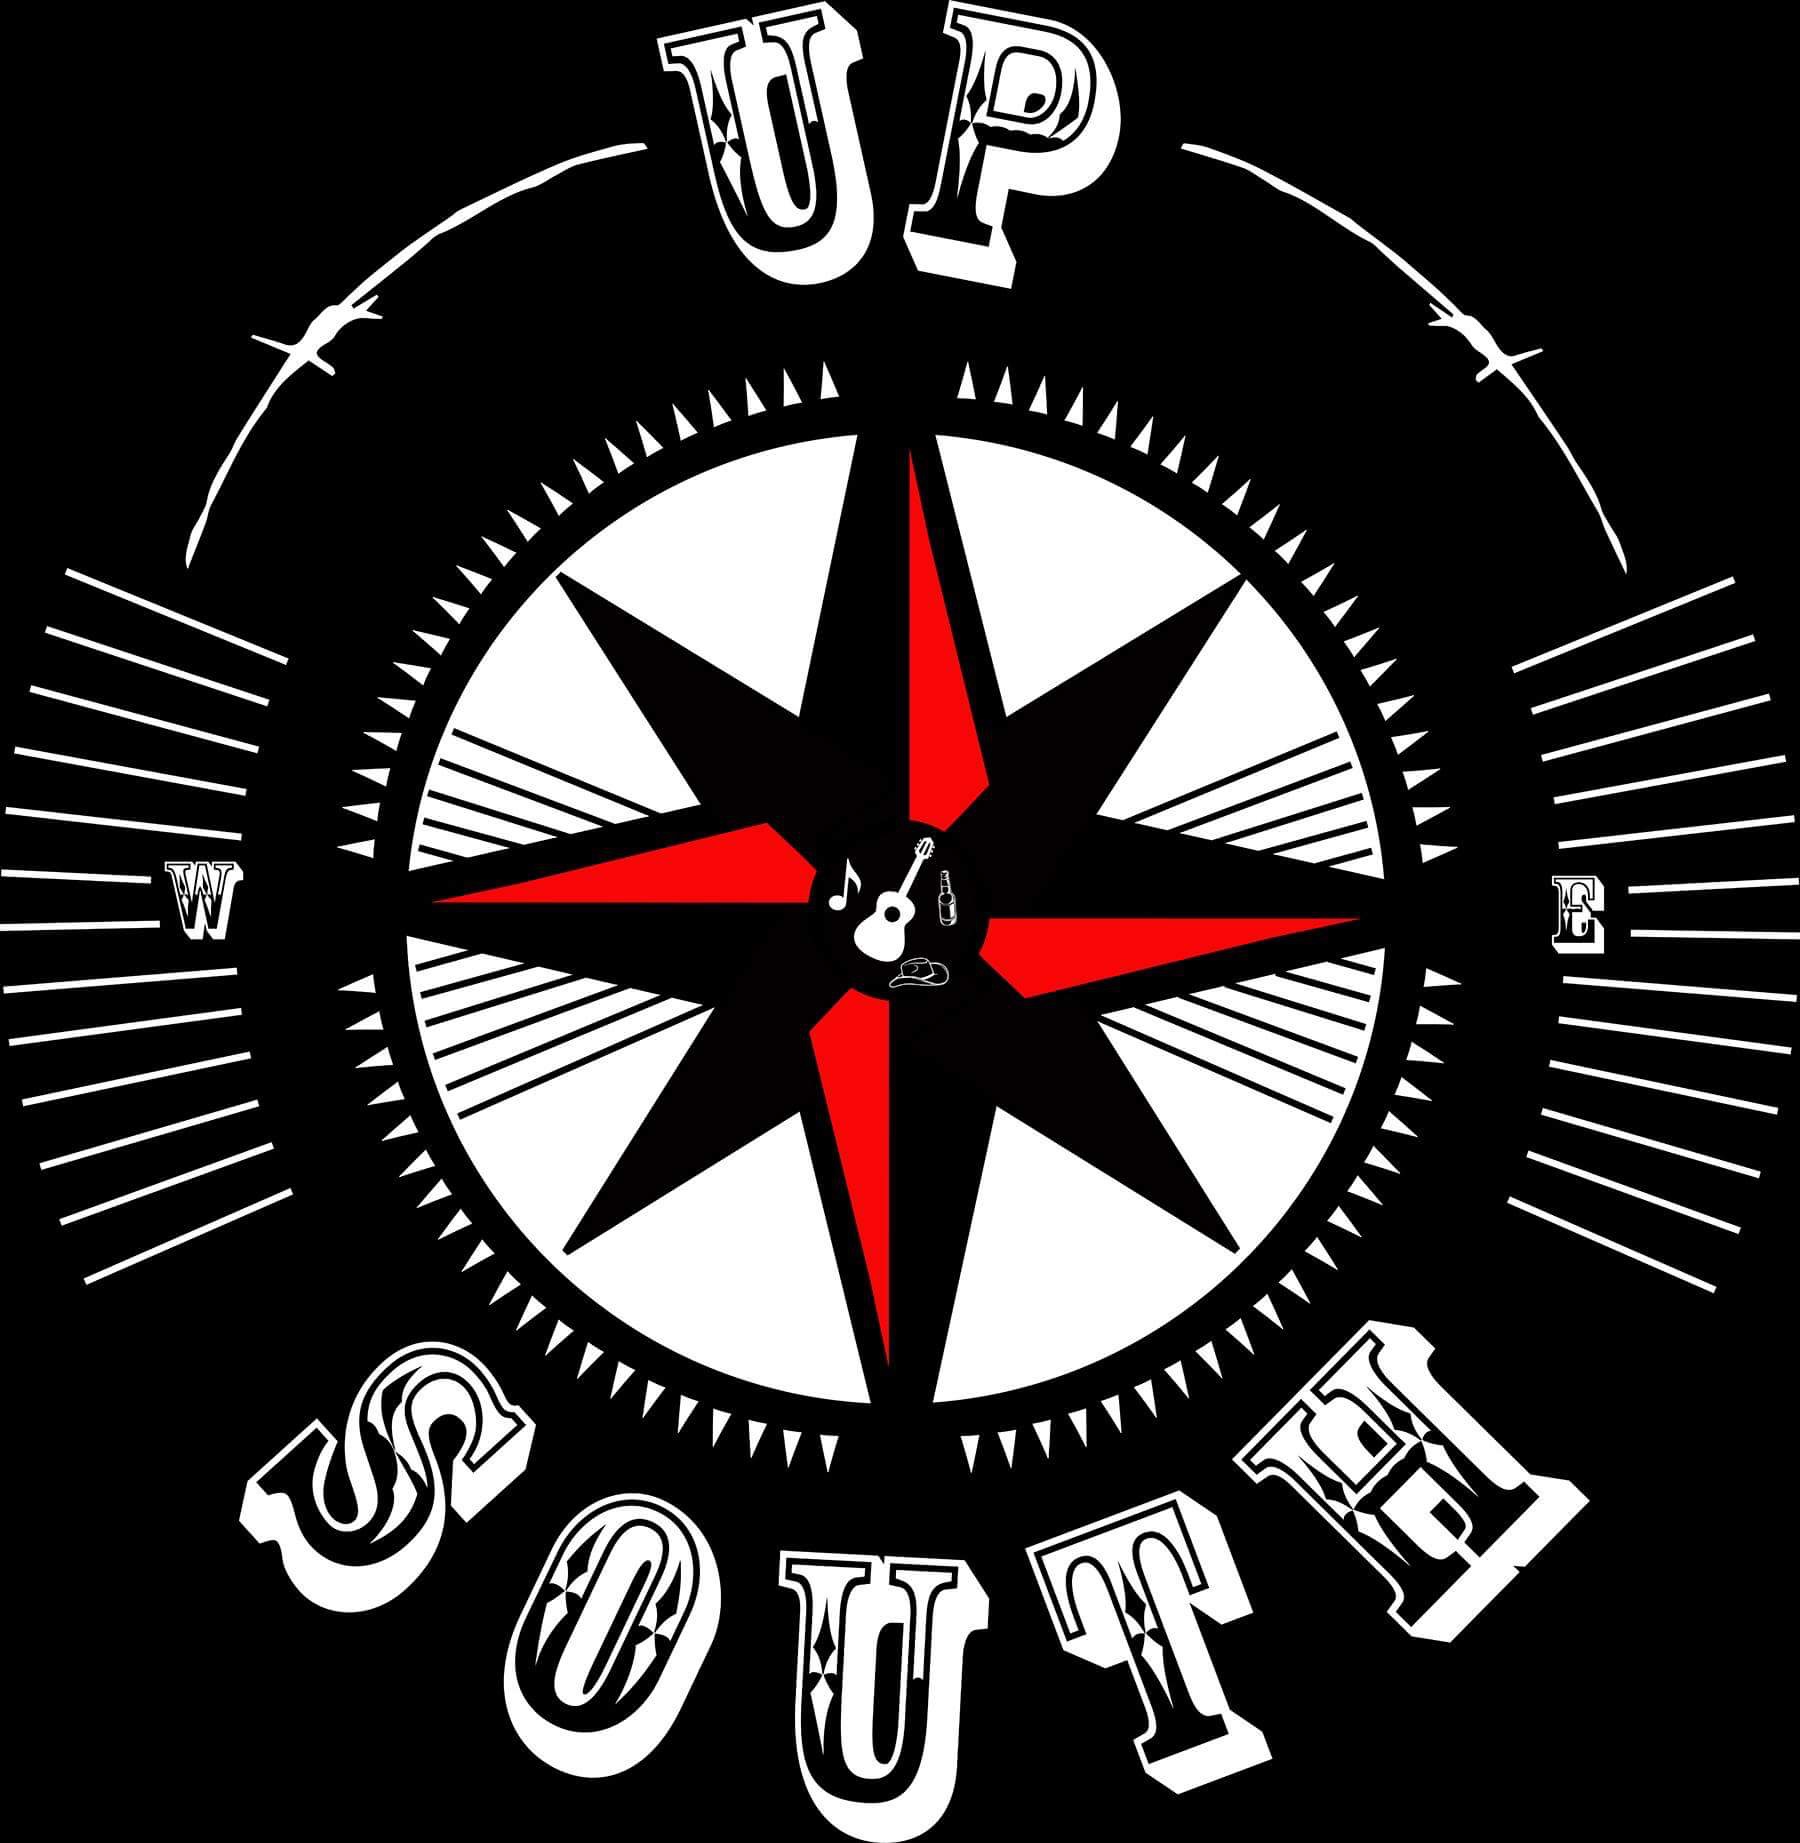 up south band logo